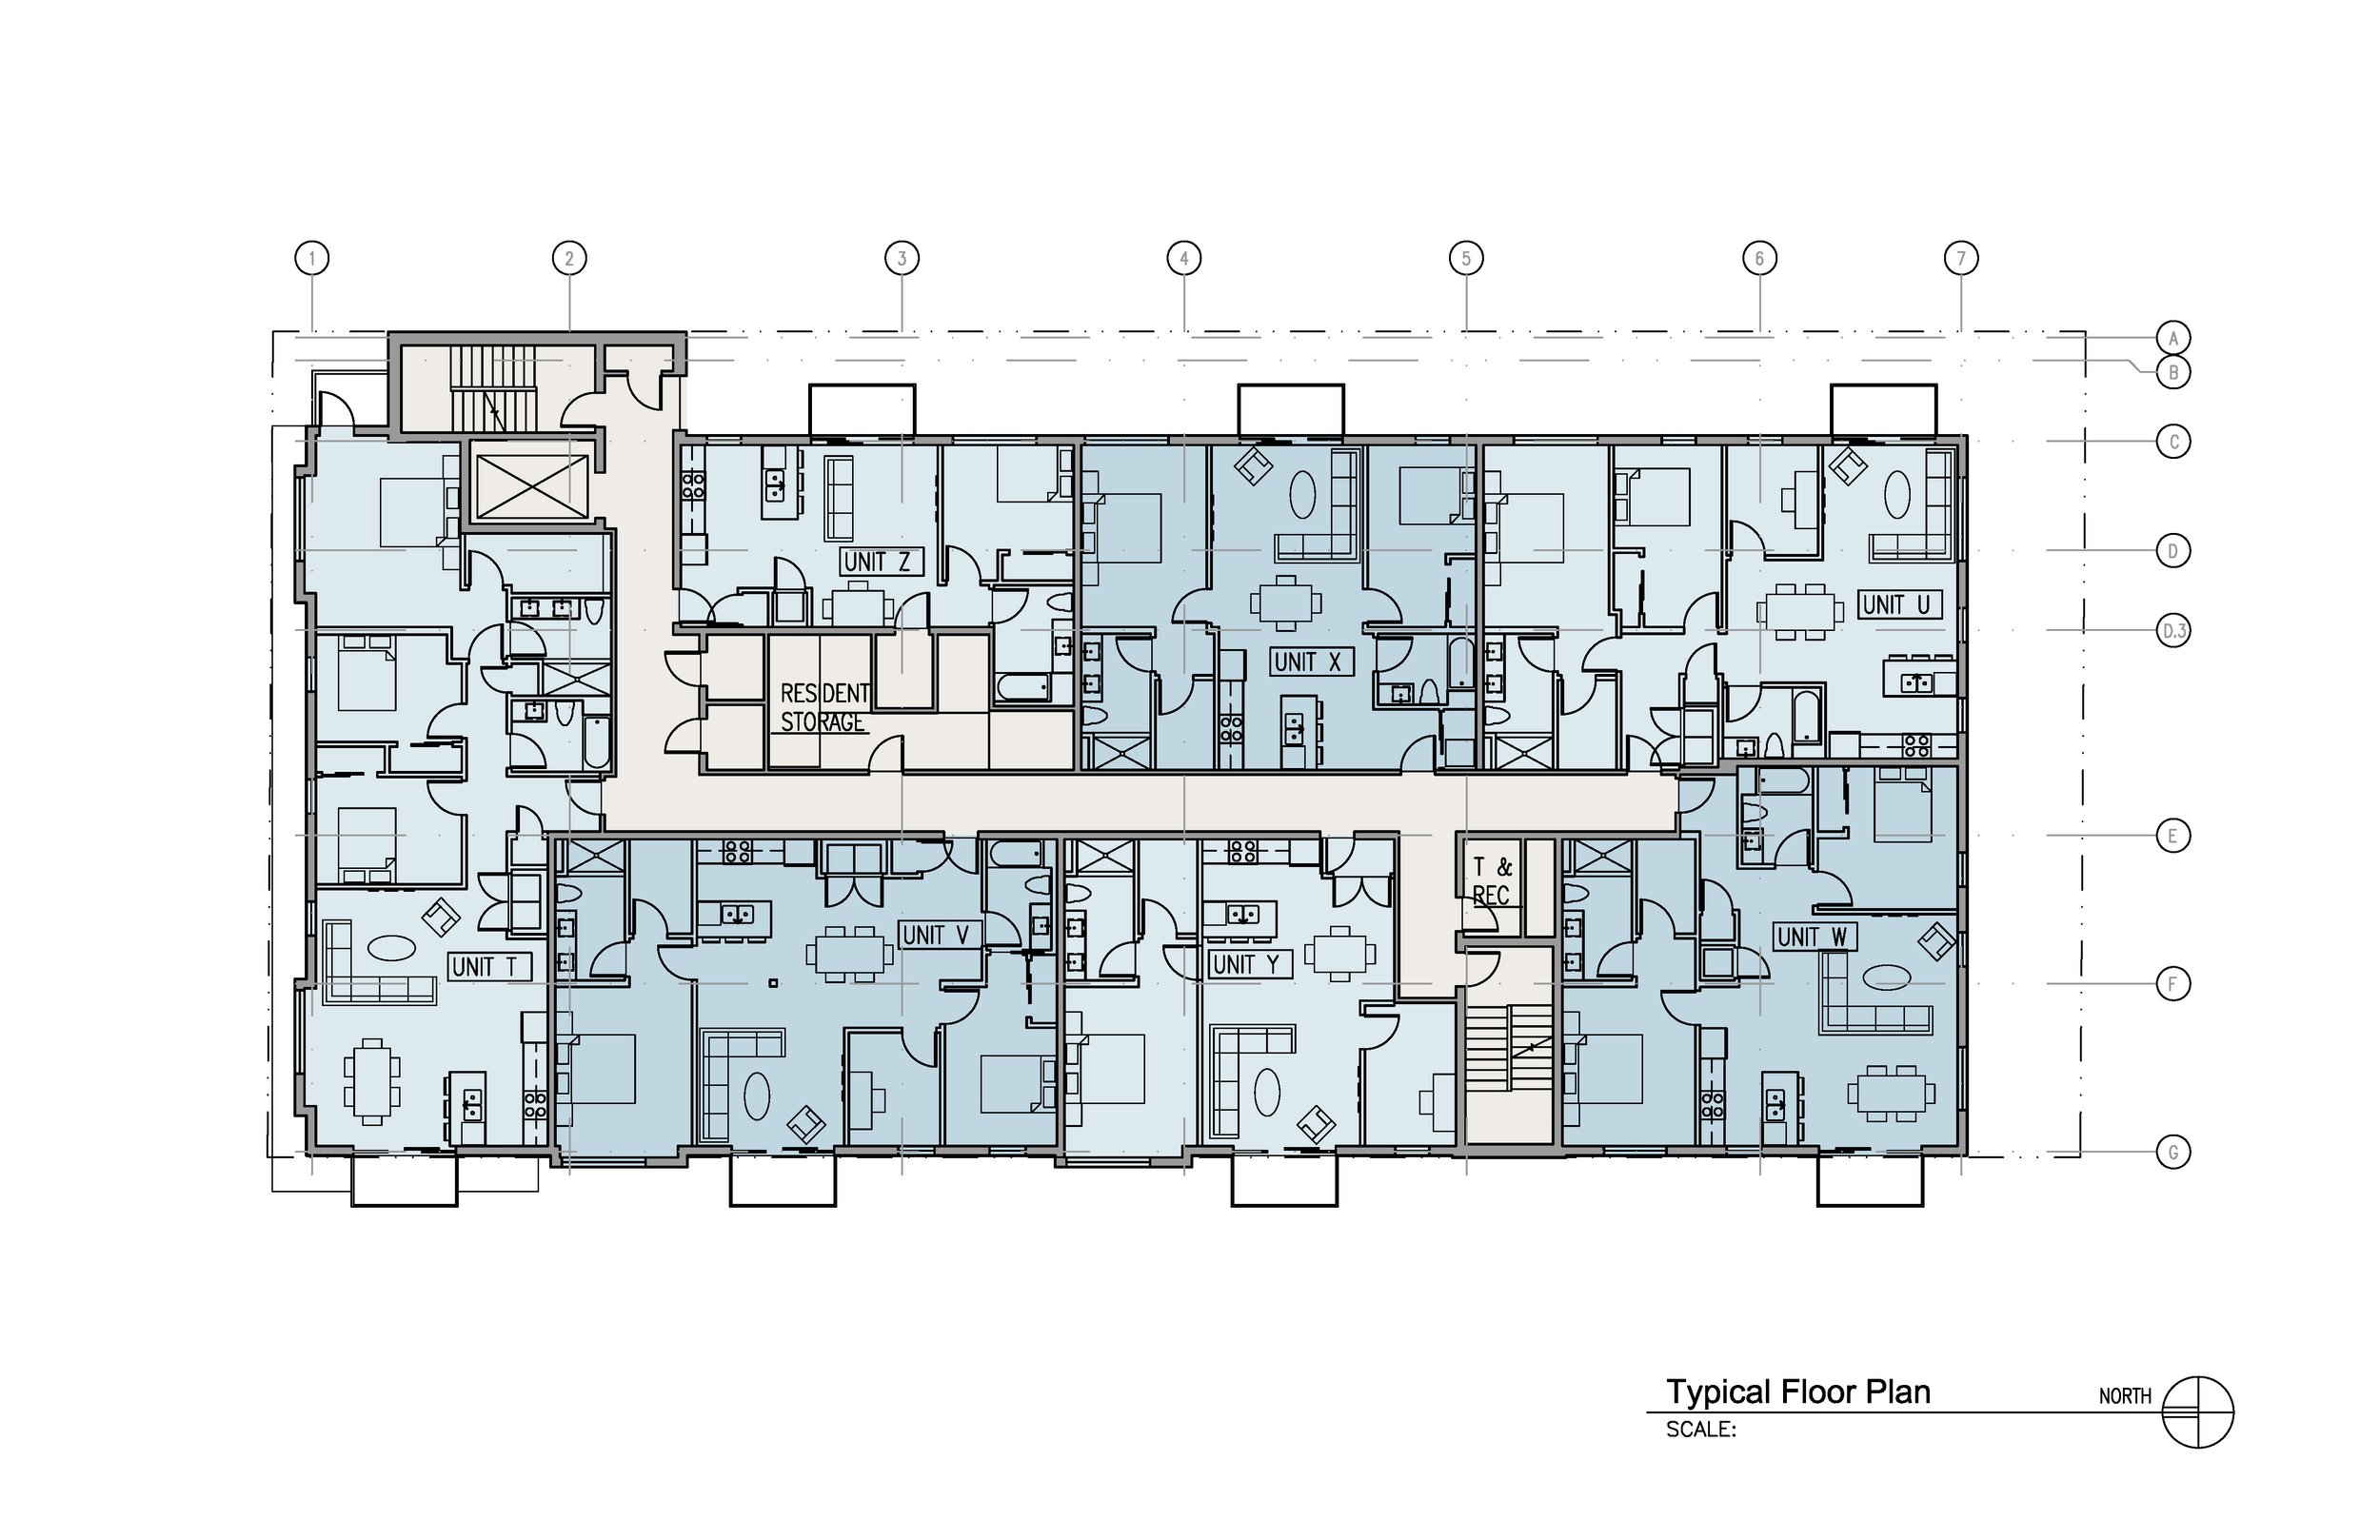 20230201_OakParkCommons_Typical Floor Plan.jpg